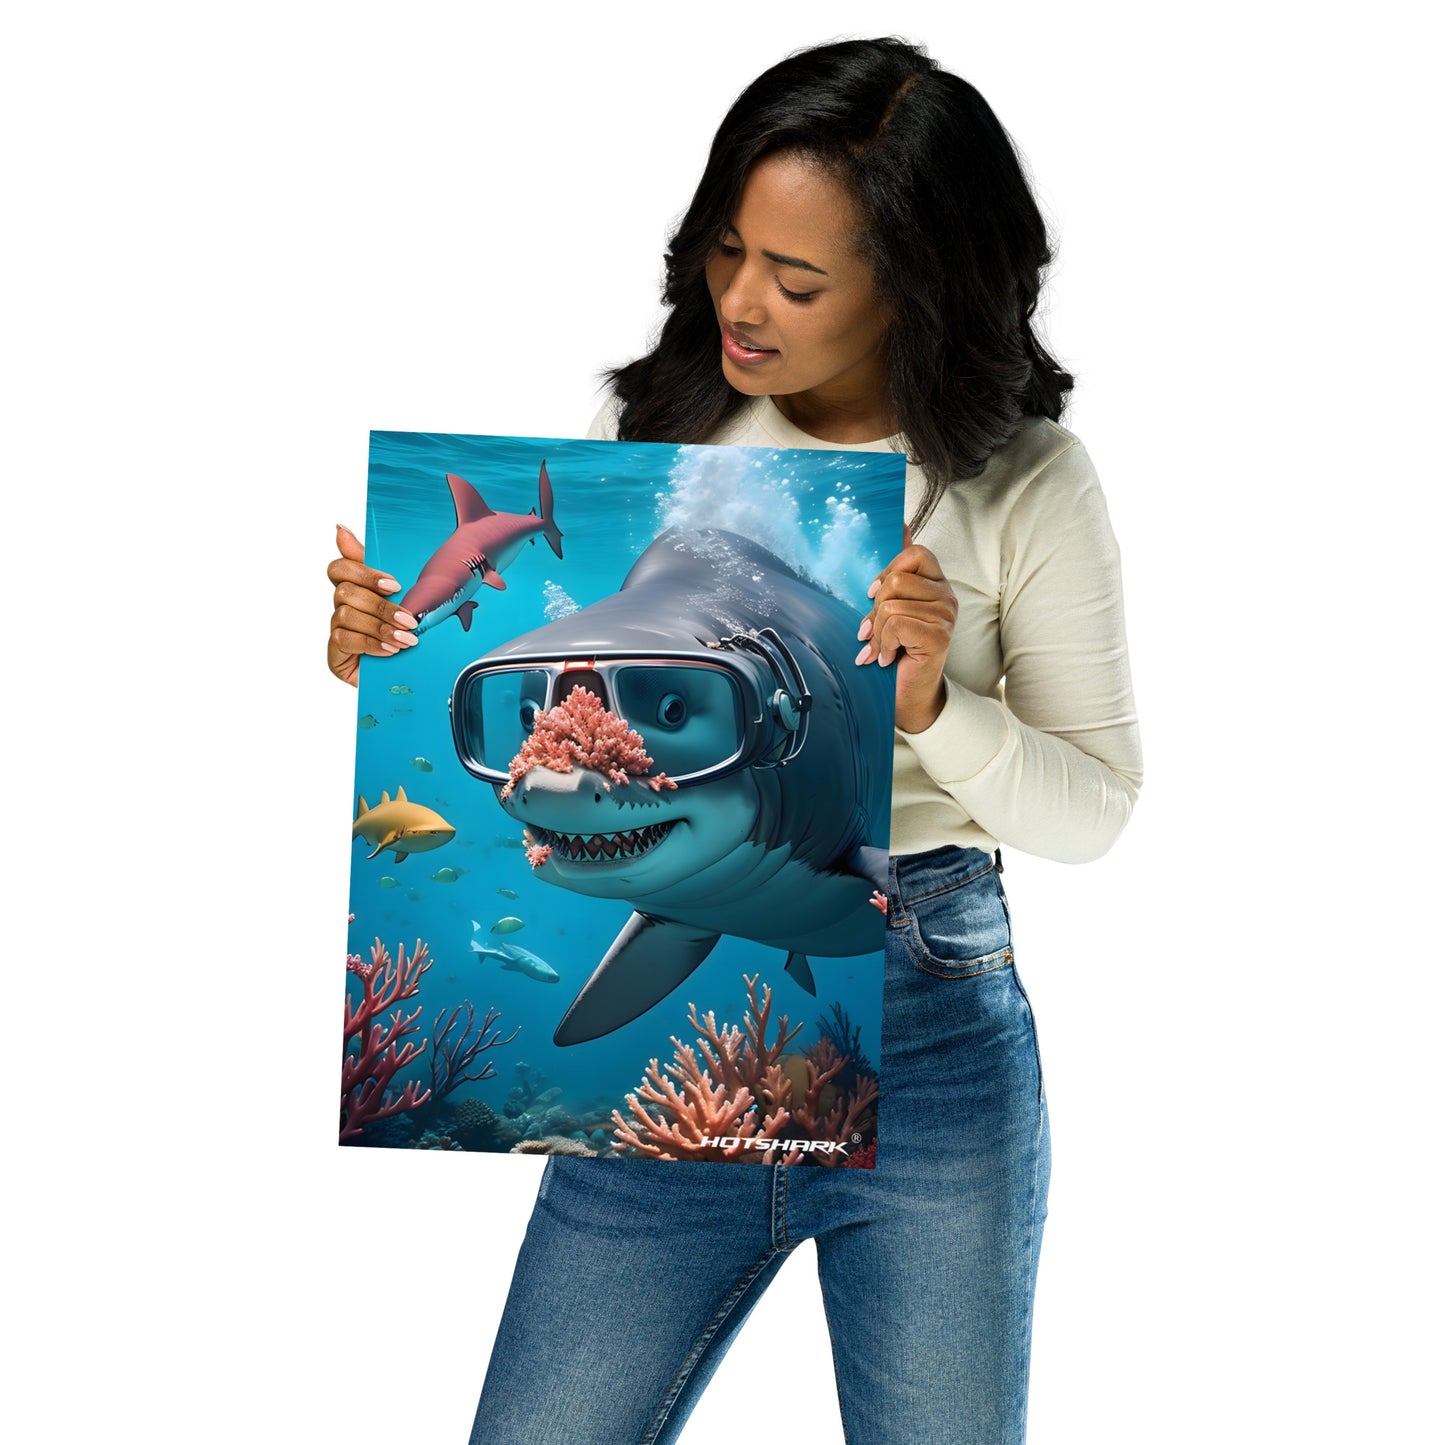 Diver3 Shark - Poster